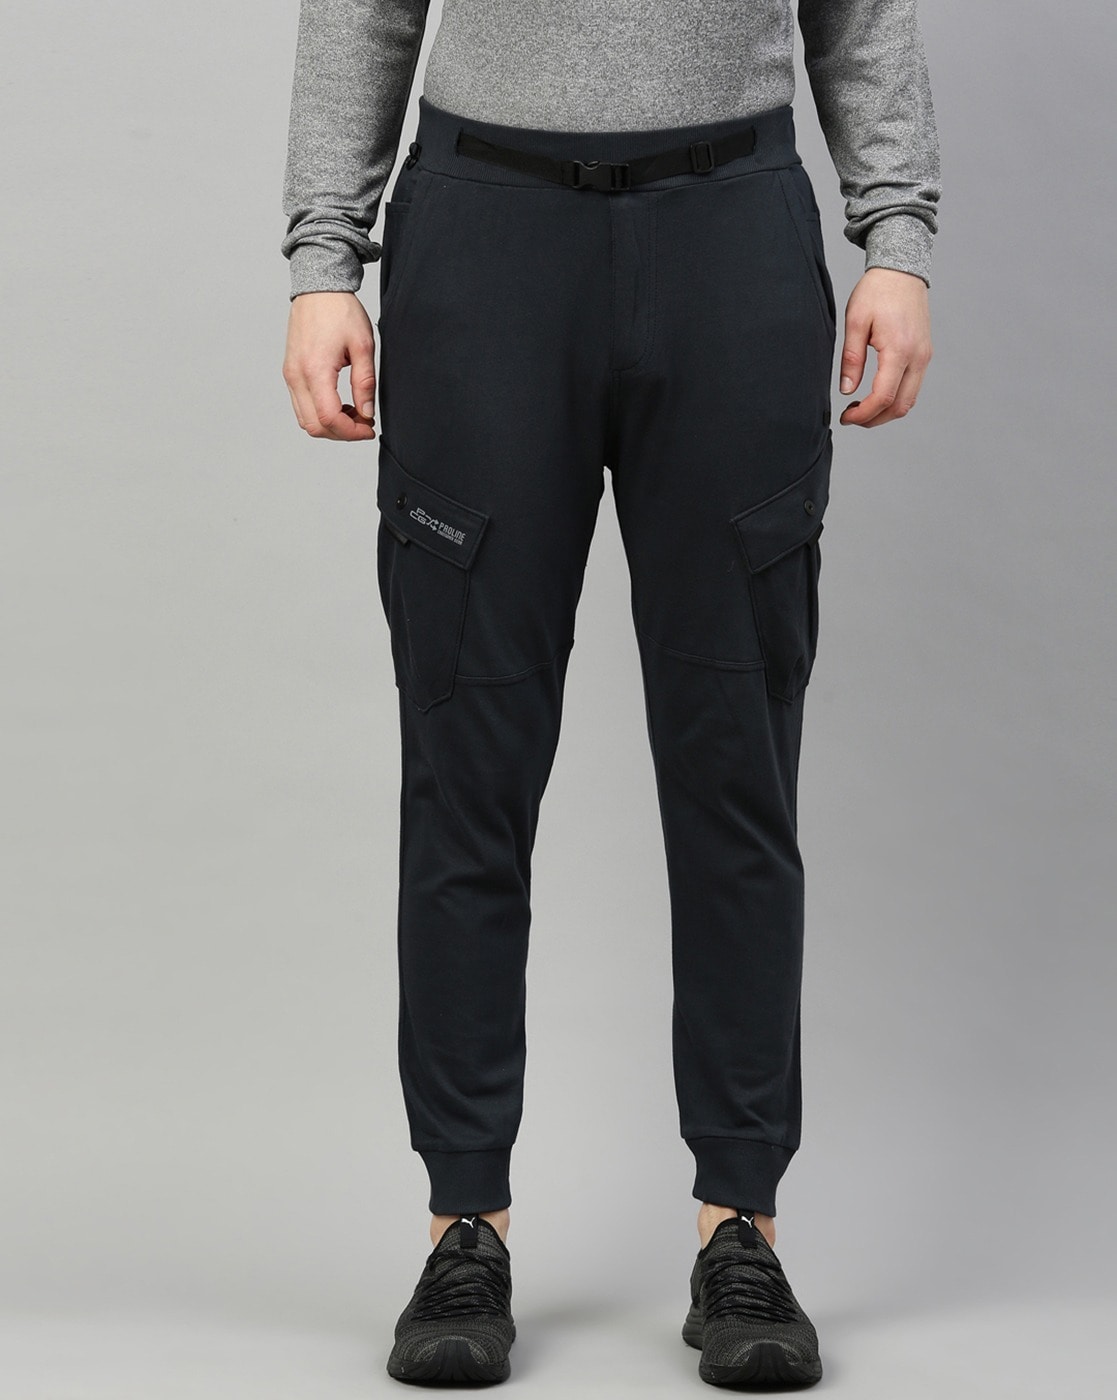 Buy Proline Men's Regular Track Pants (PV18457RLGML_GML_L) at Amazon.in